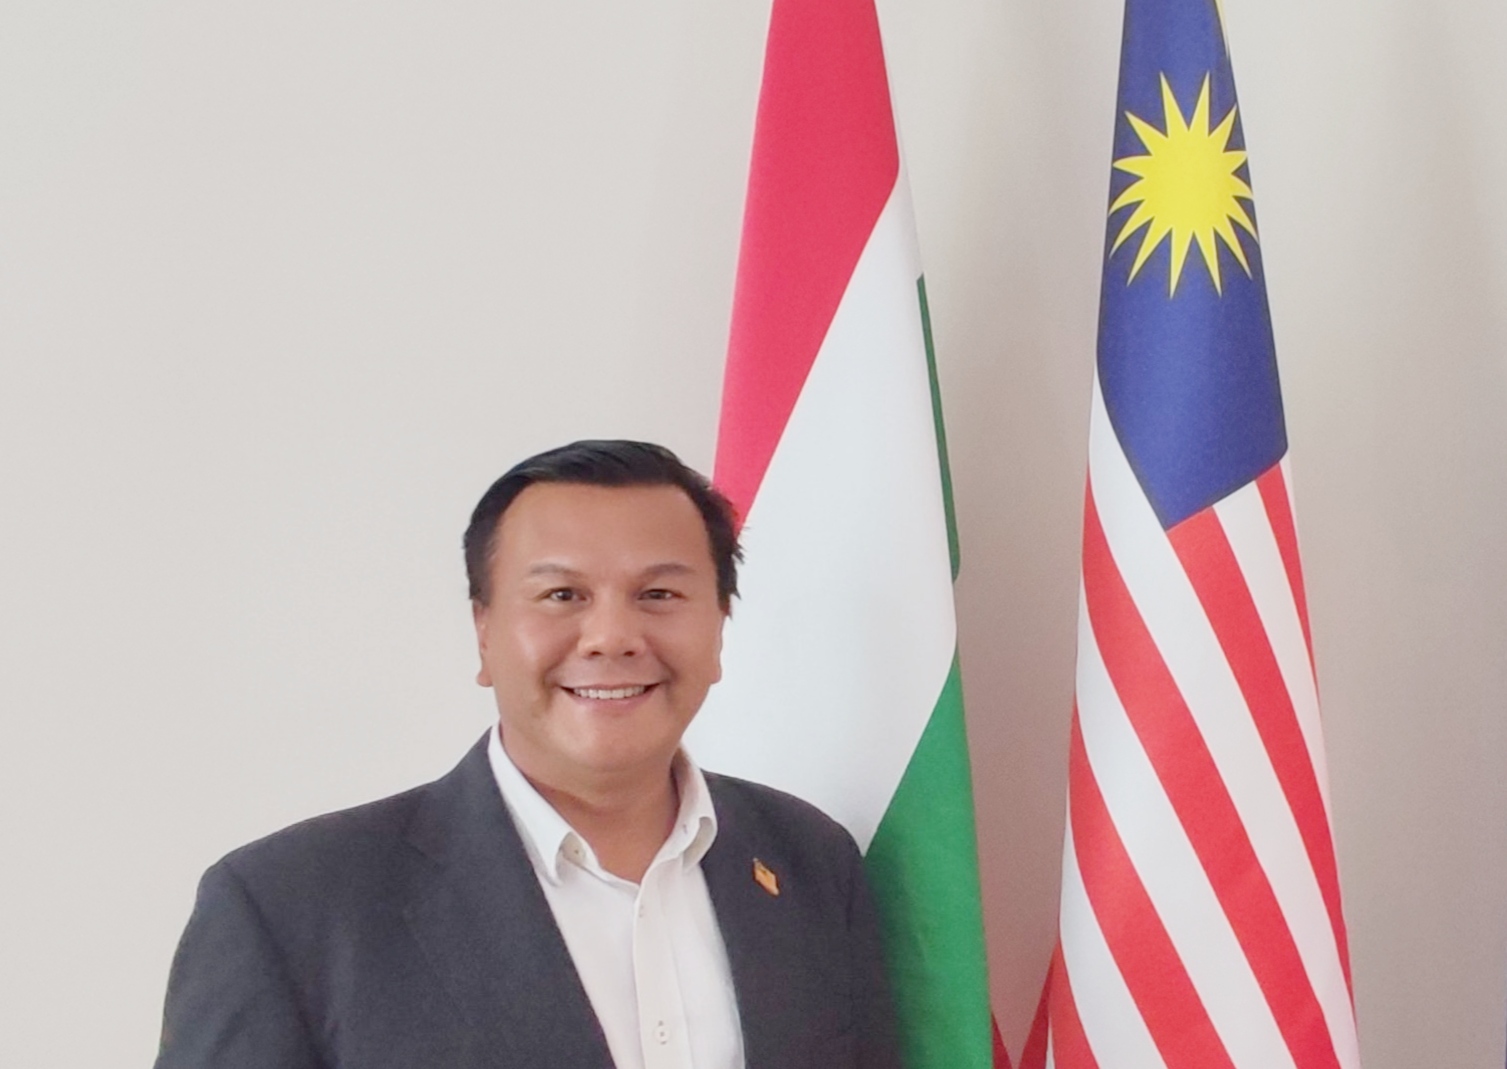 H.E. Ambassador Francisco Munis, Ambassador of Malaysia in Hungary